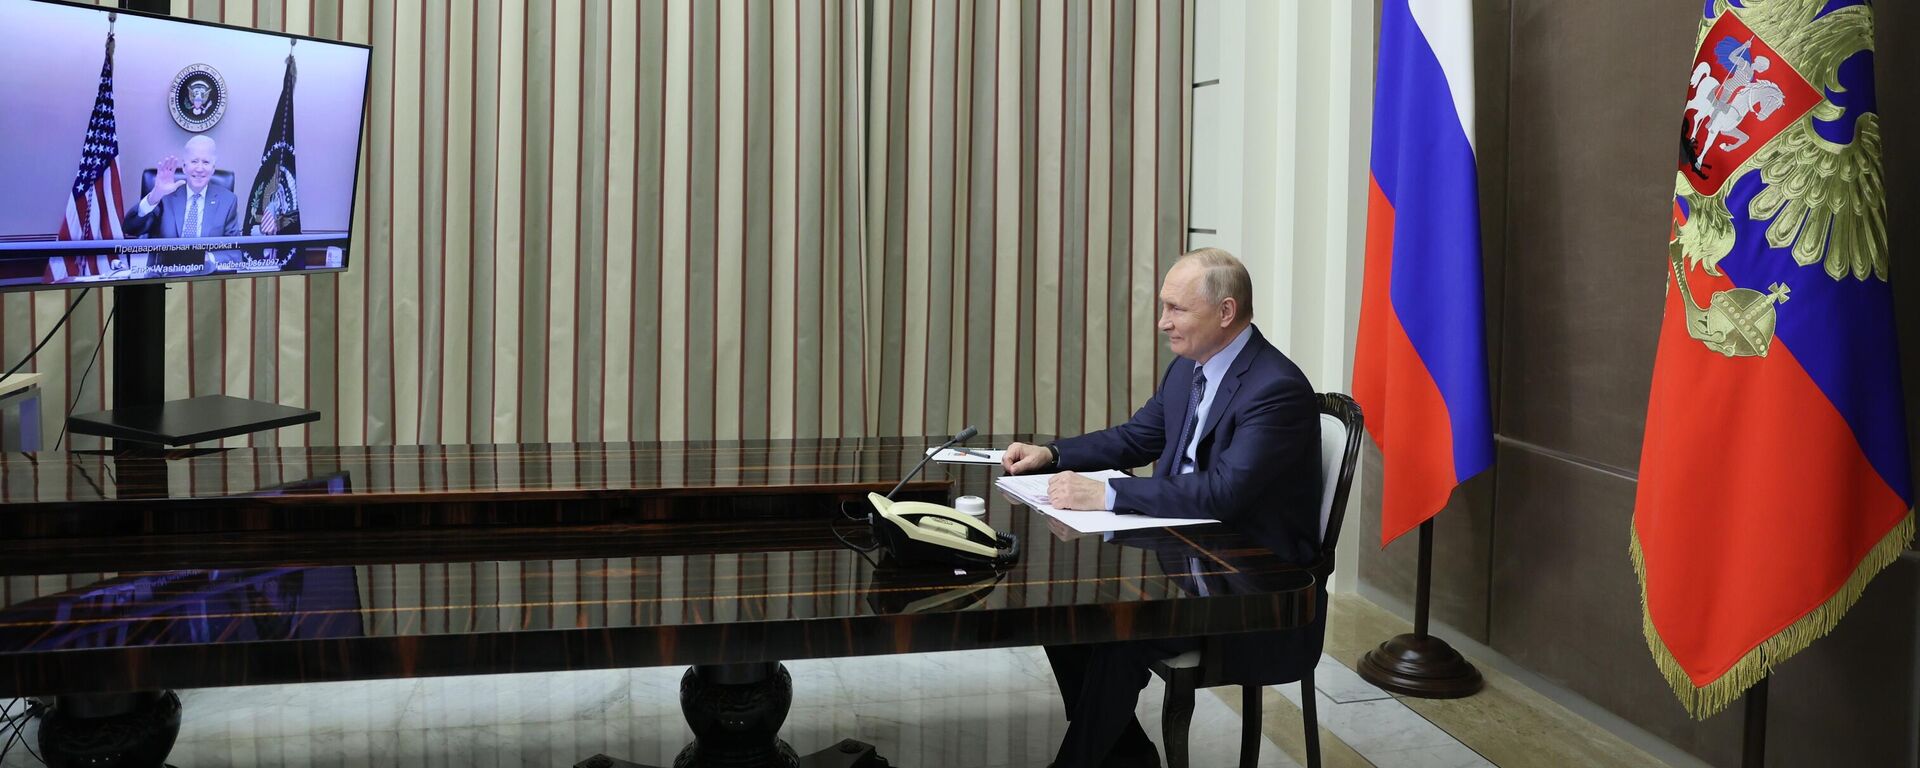 Переговоры президента РФ В. Путина и президента США Дж. Байдена - Sputnik Таджикистан, 1920, 08.12.2021